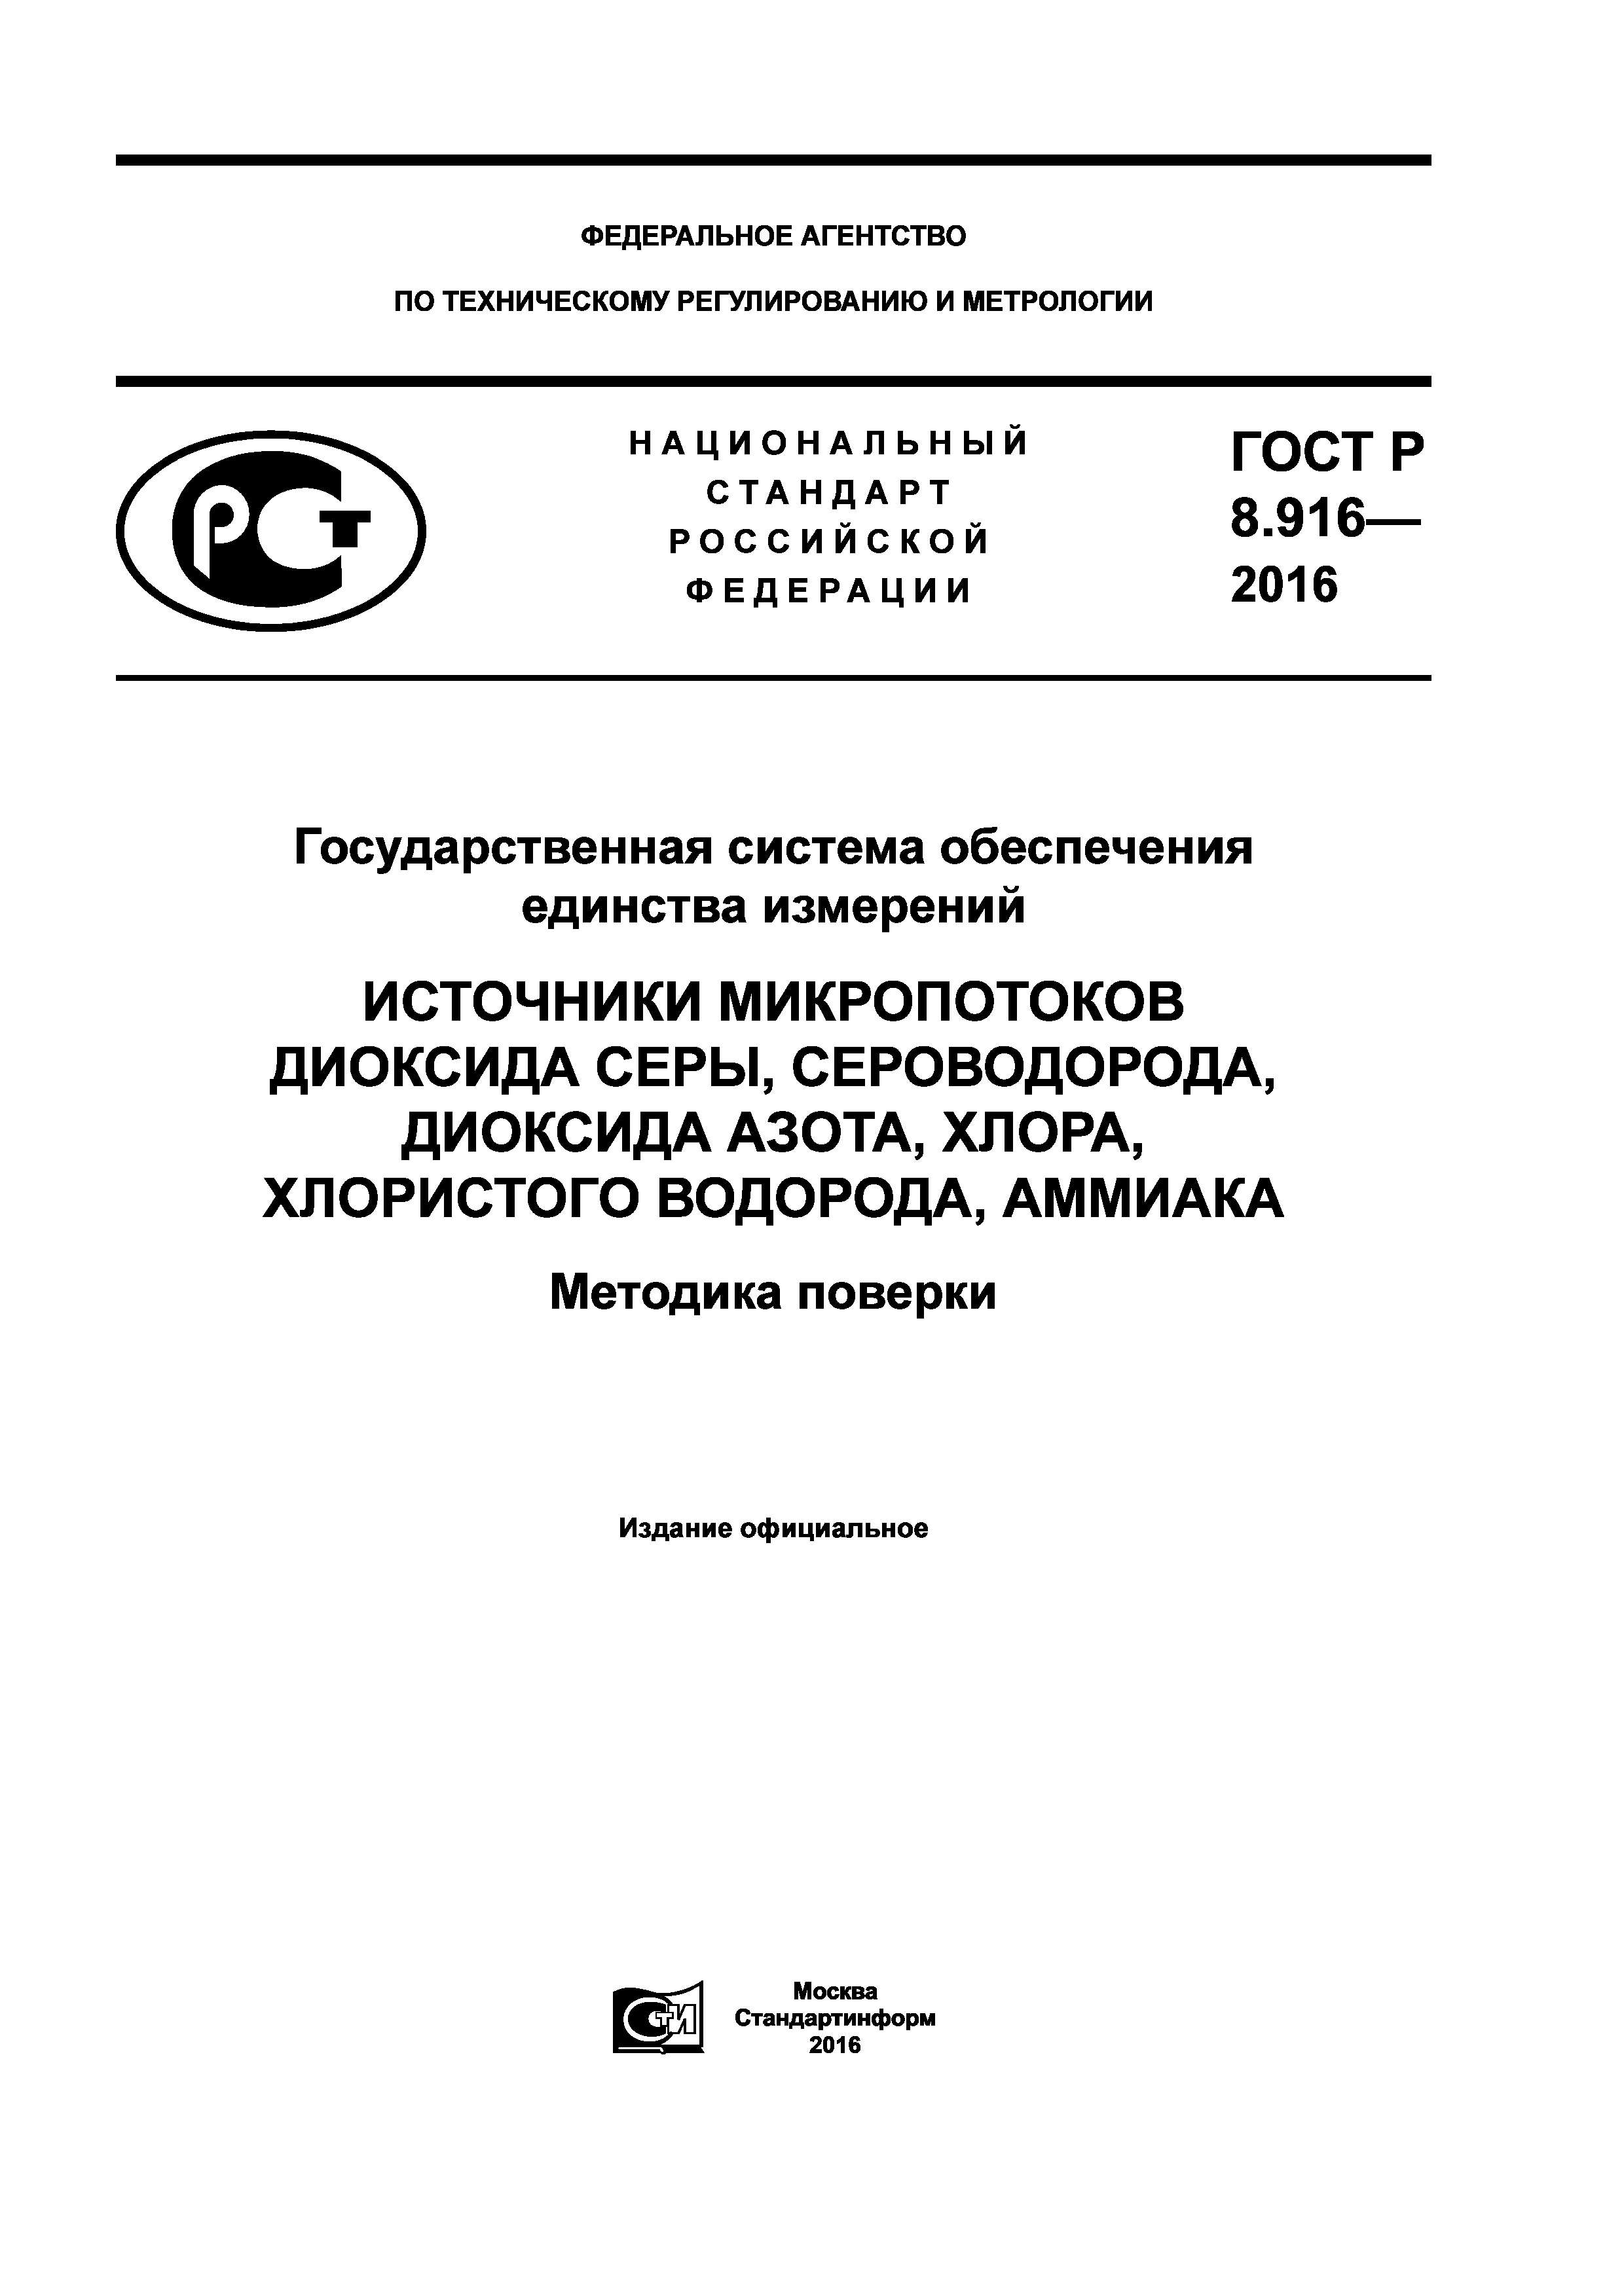 ГОСТ Р 8.916-2016